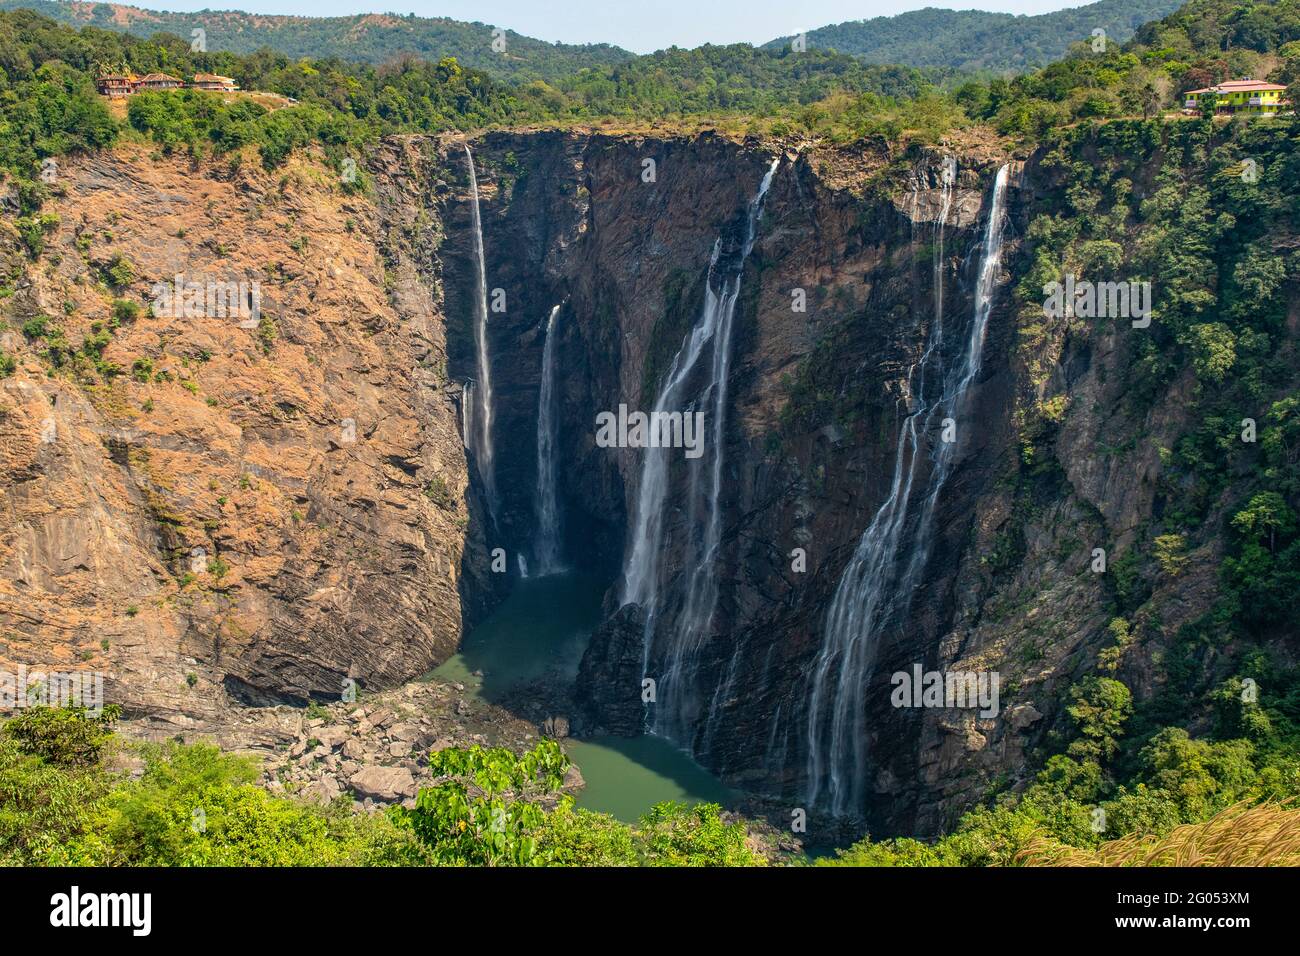 Jog fällt, Sagara, Karnataka, Indien Stockfoto